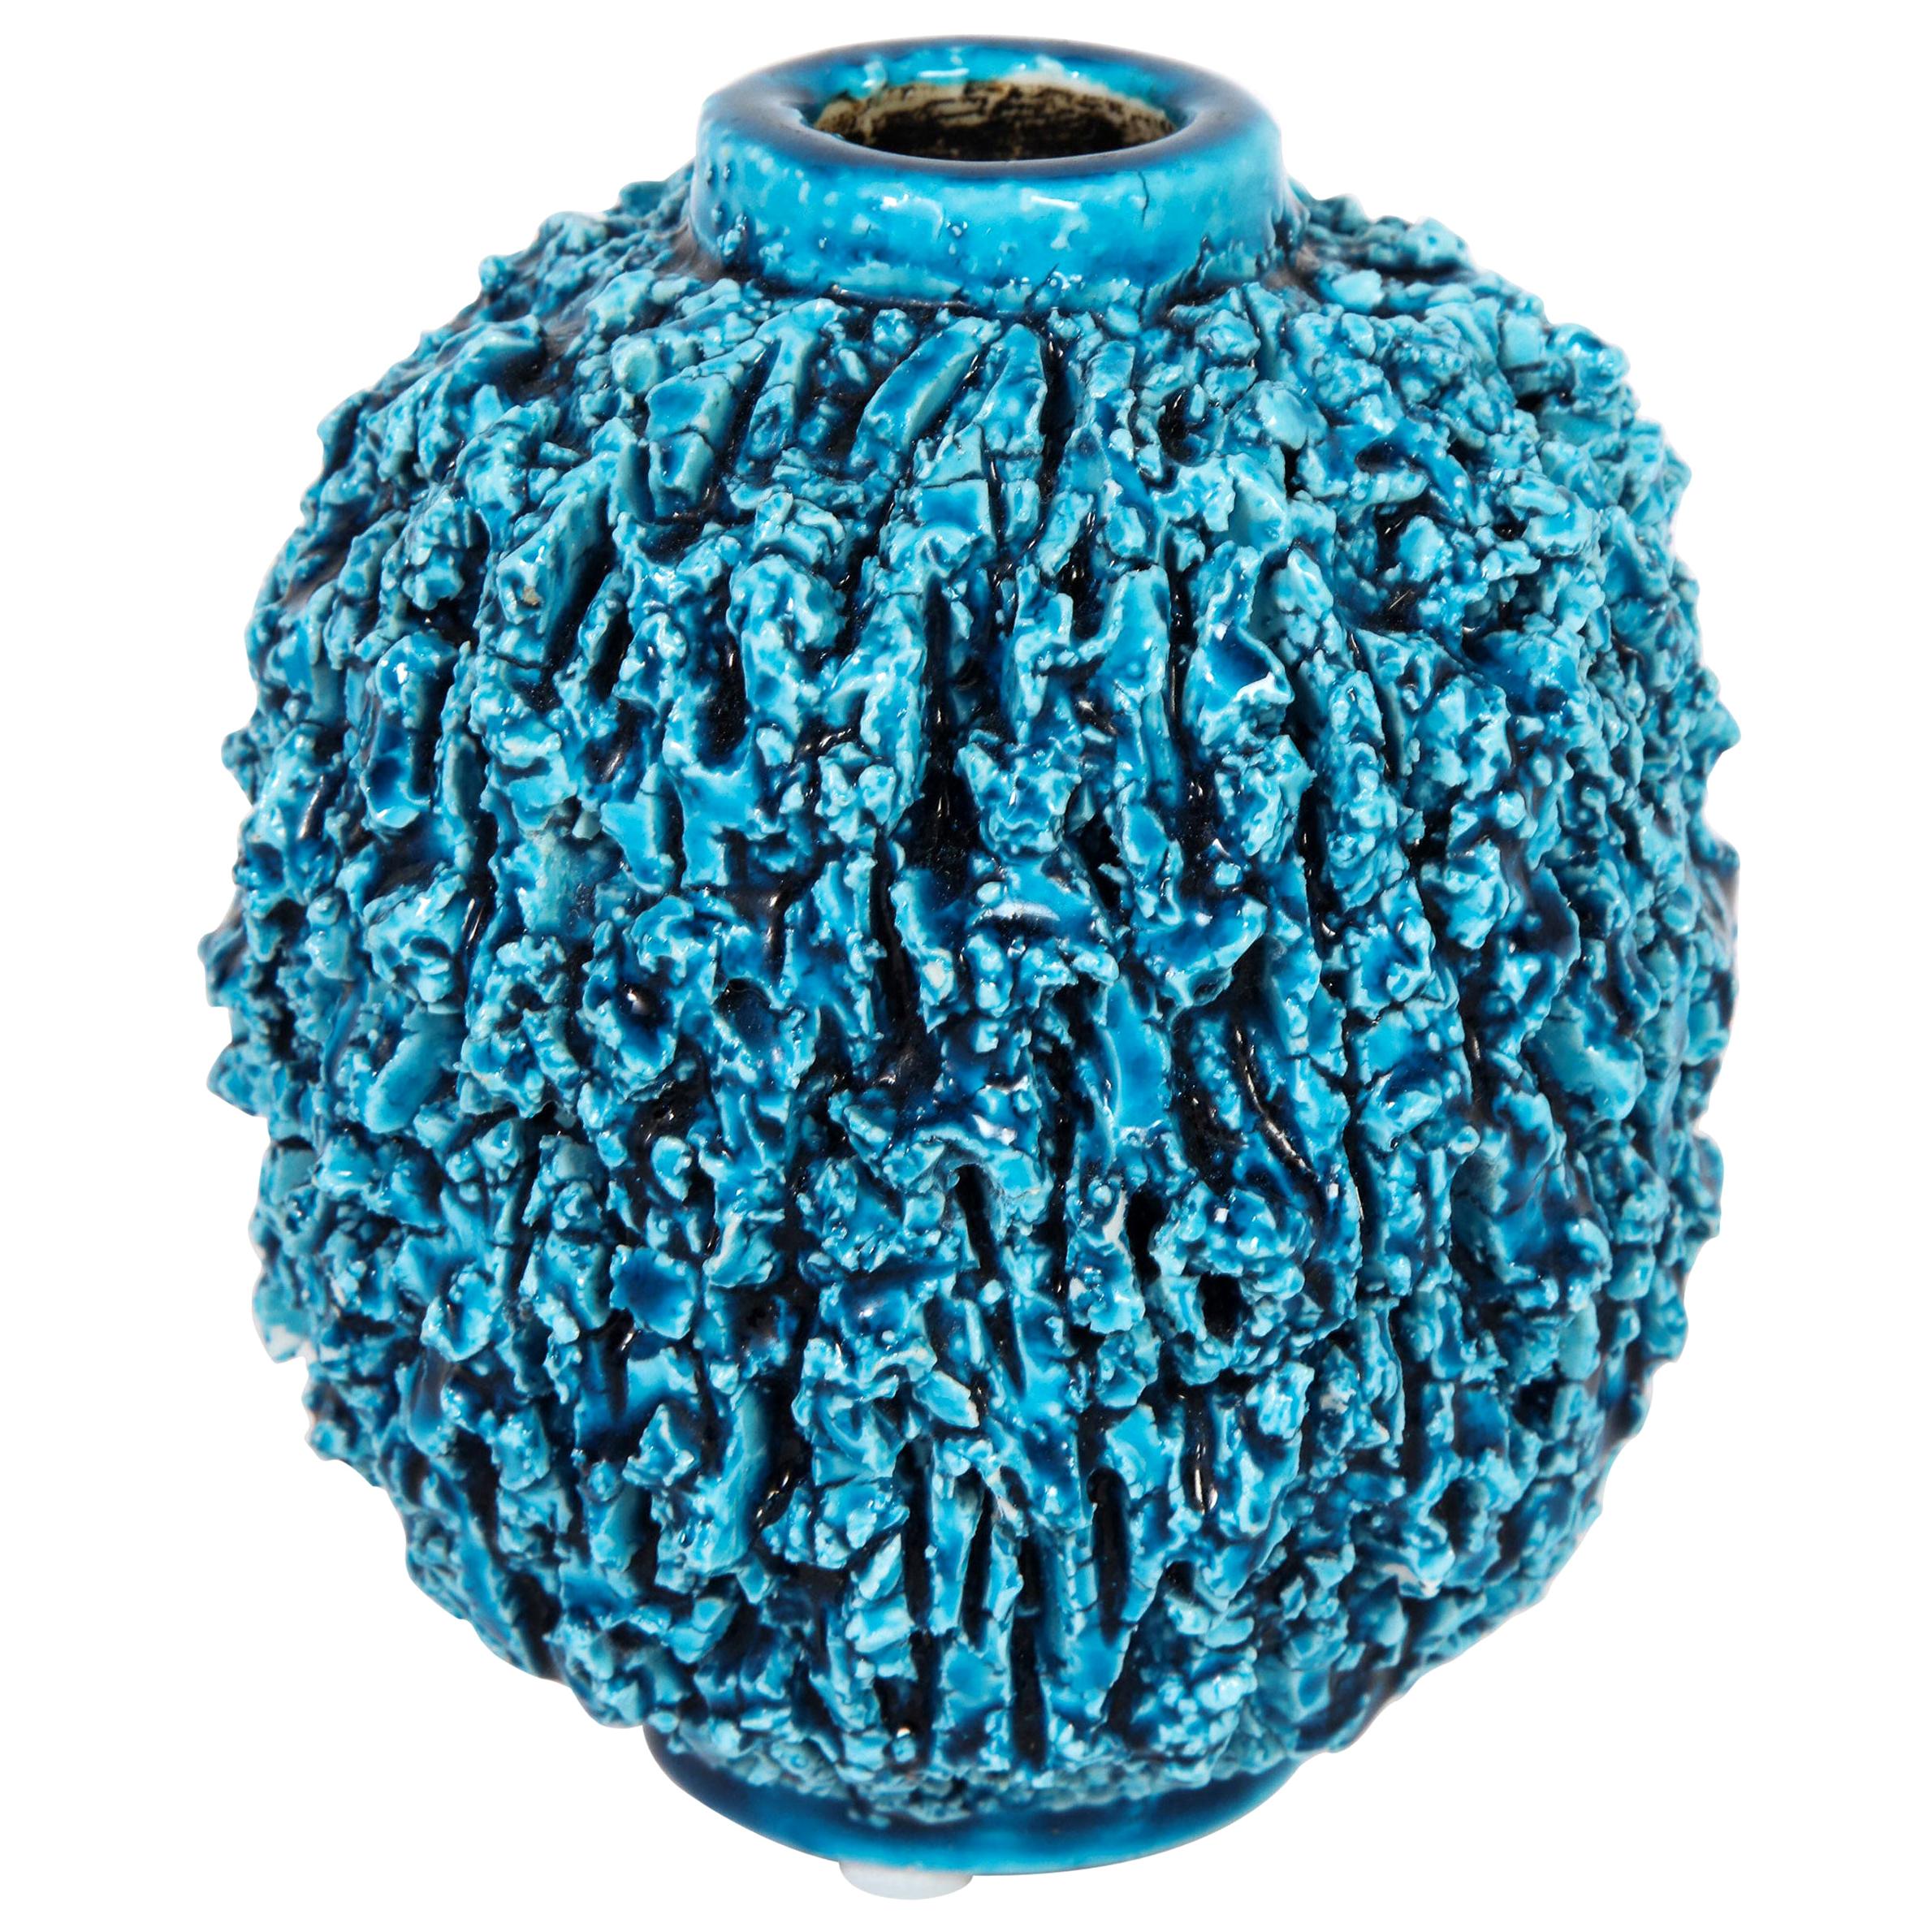 Ceramic Vase by Gunnar Nylund, Scandinavian, circa 1950, Turquoise, "Charmotte"